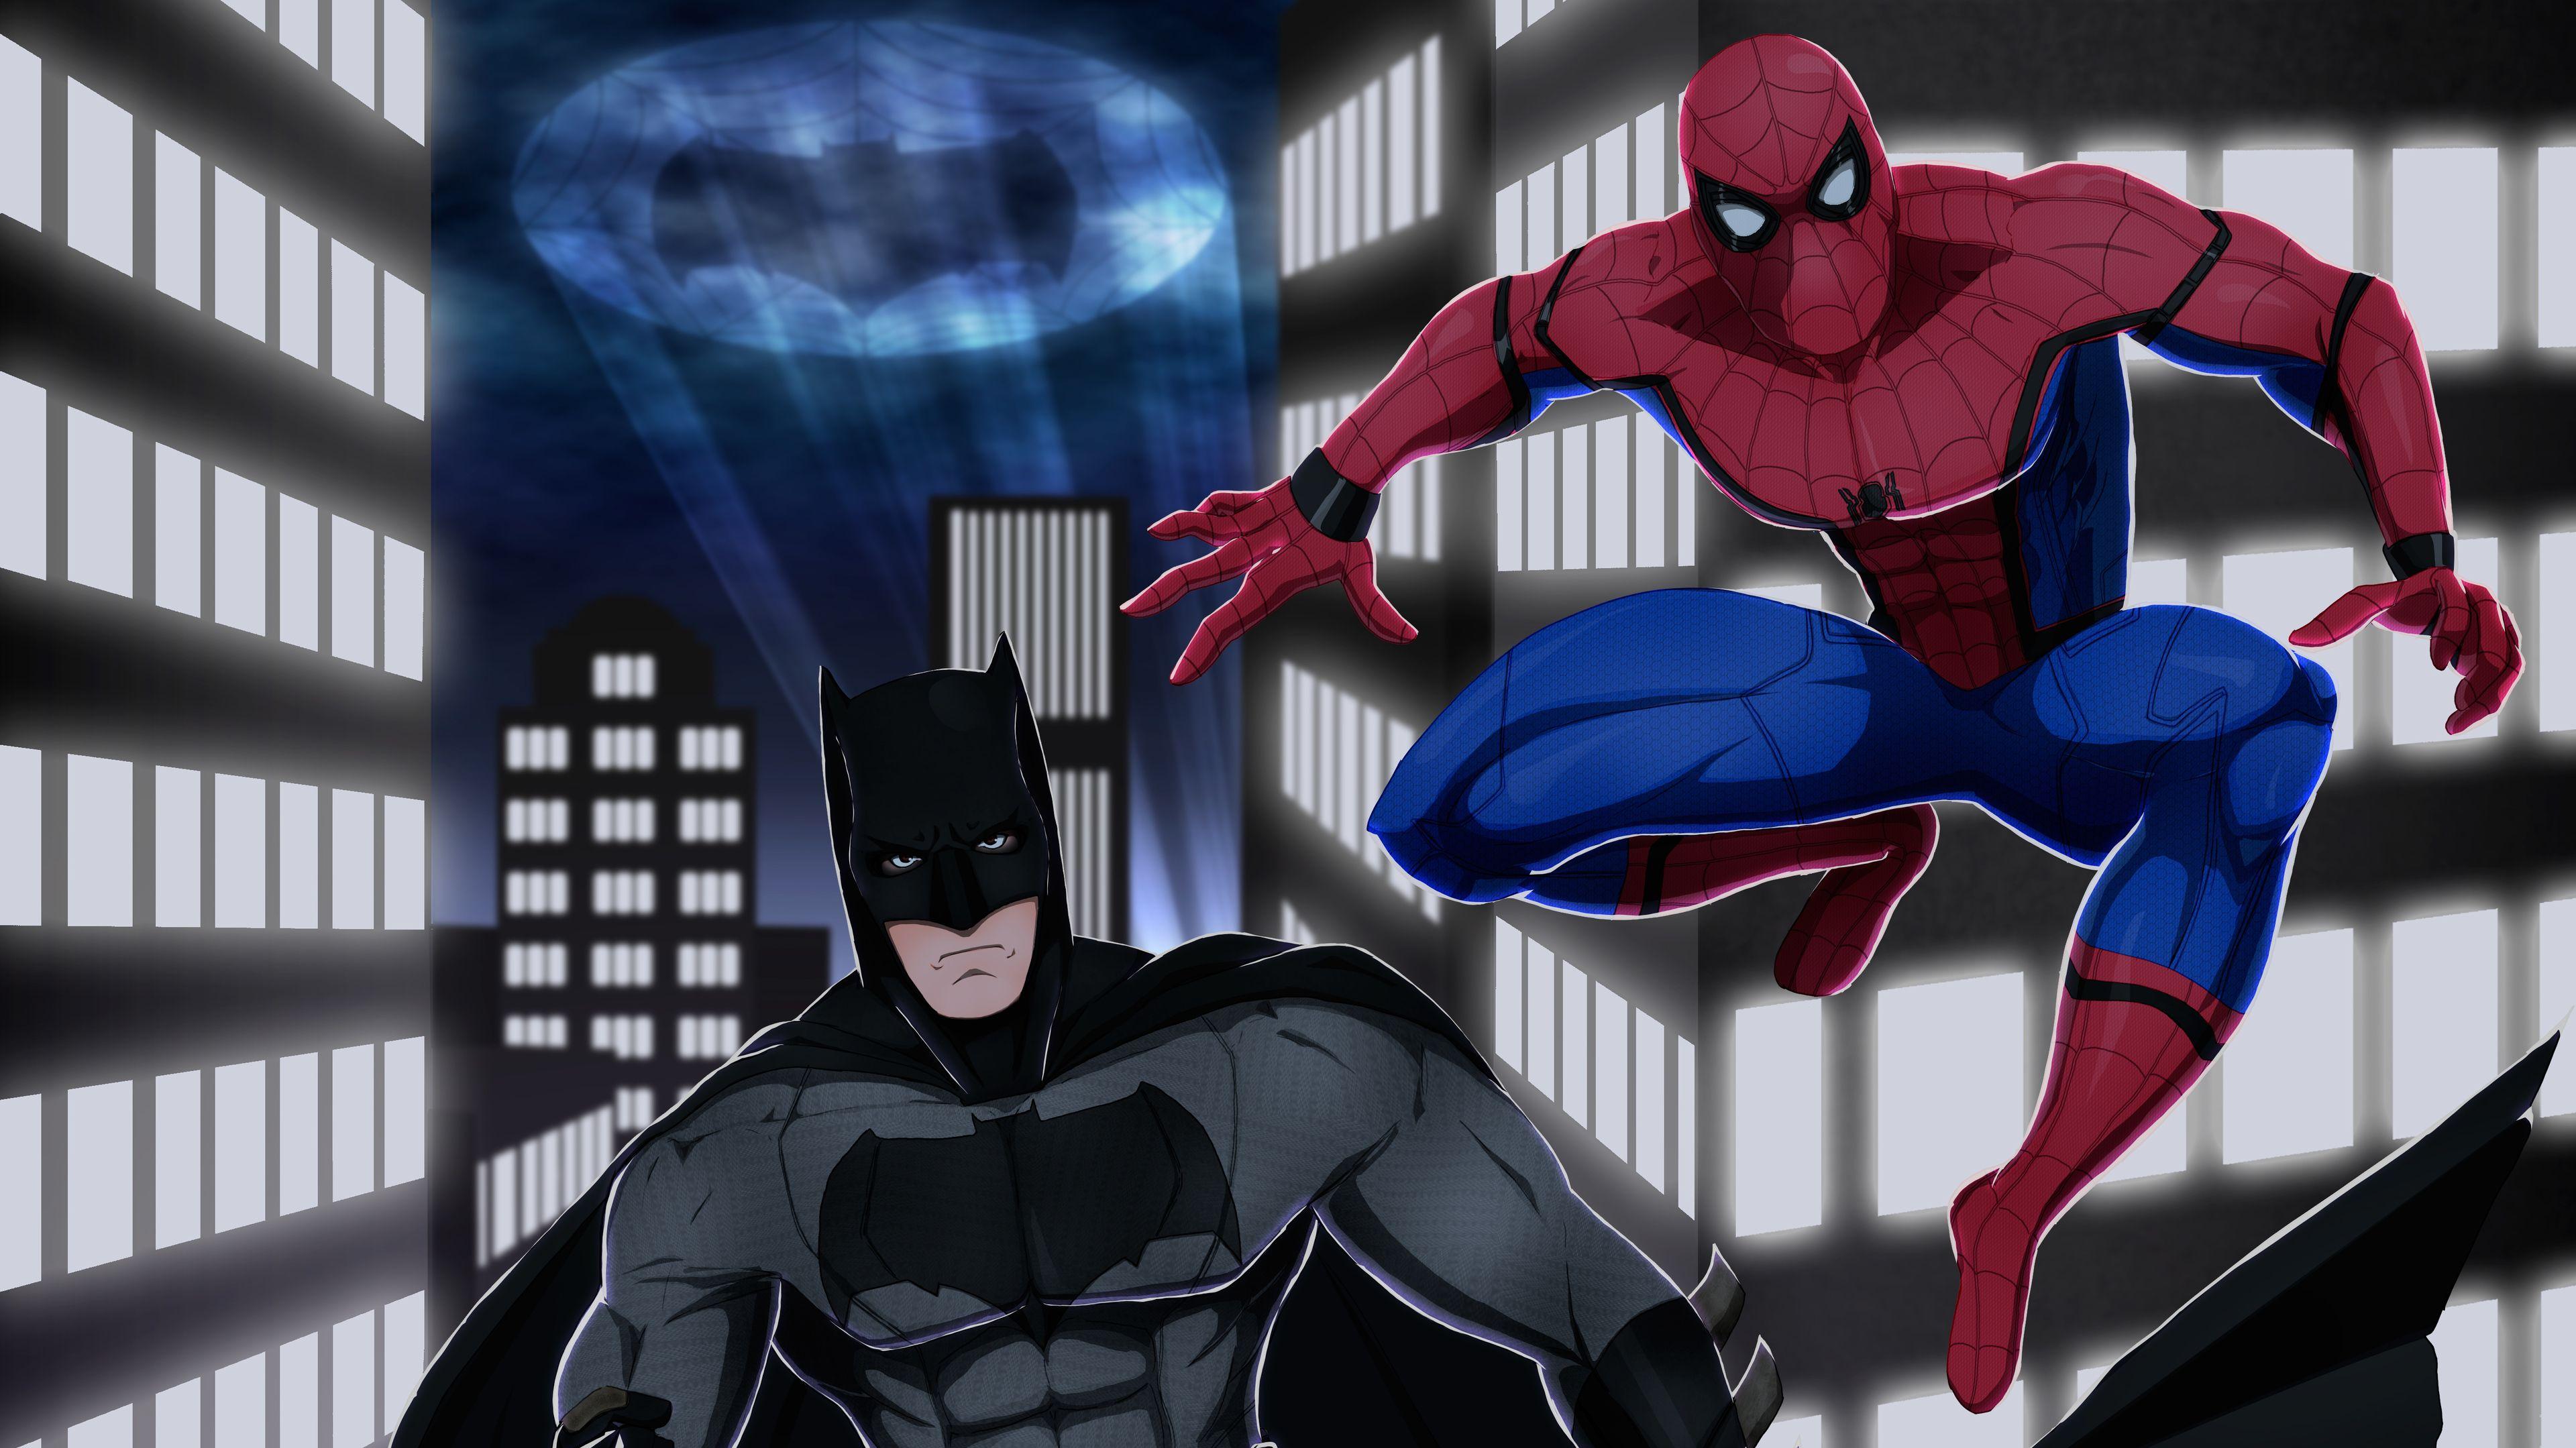 Protectors Of The City 4k Wallpaper Superhero Spiderman